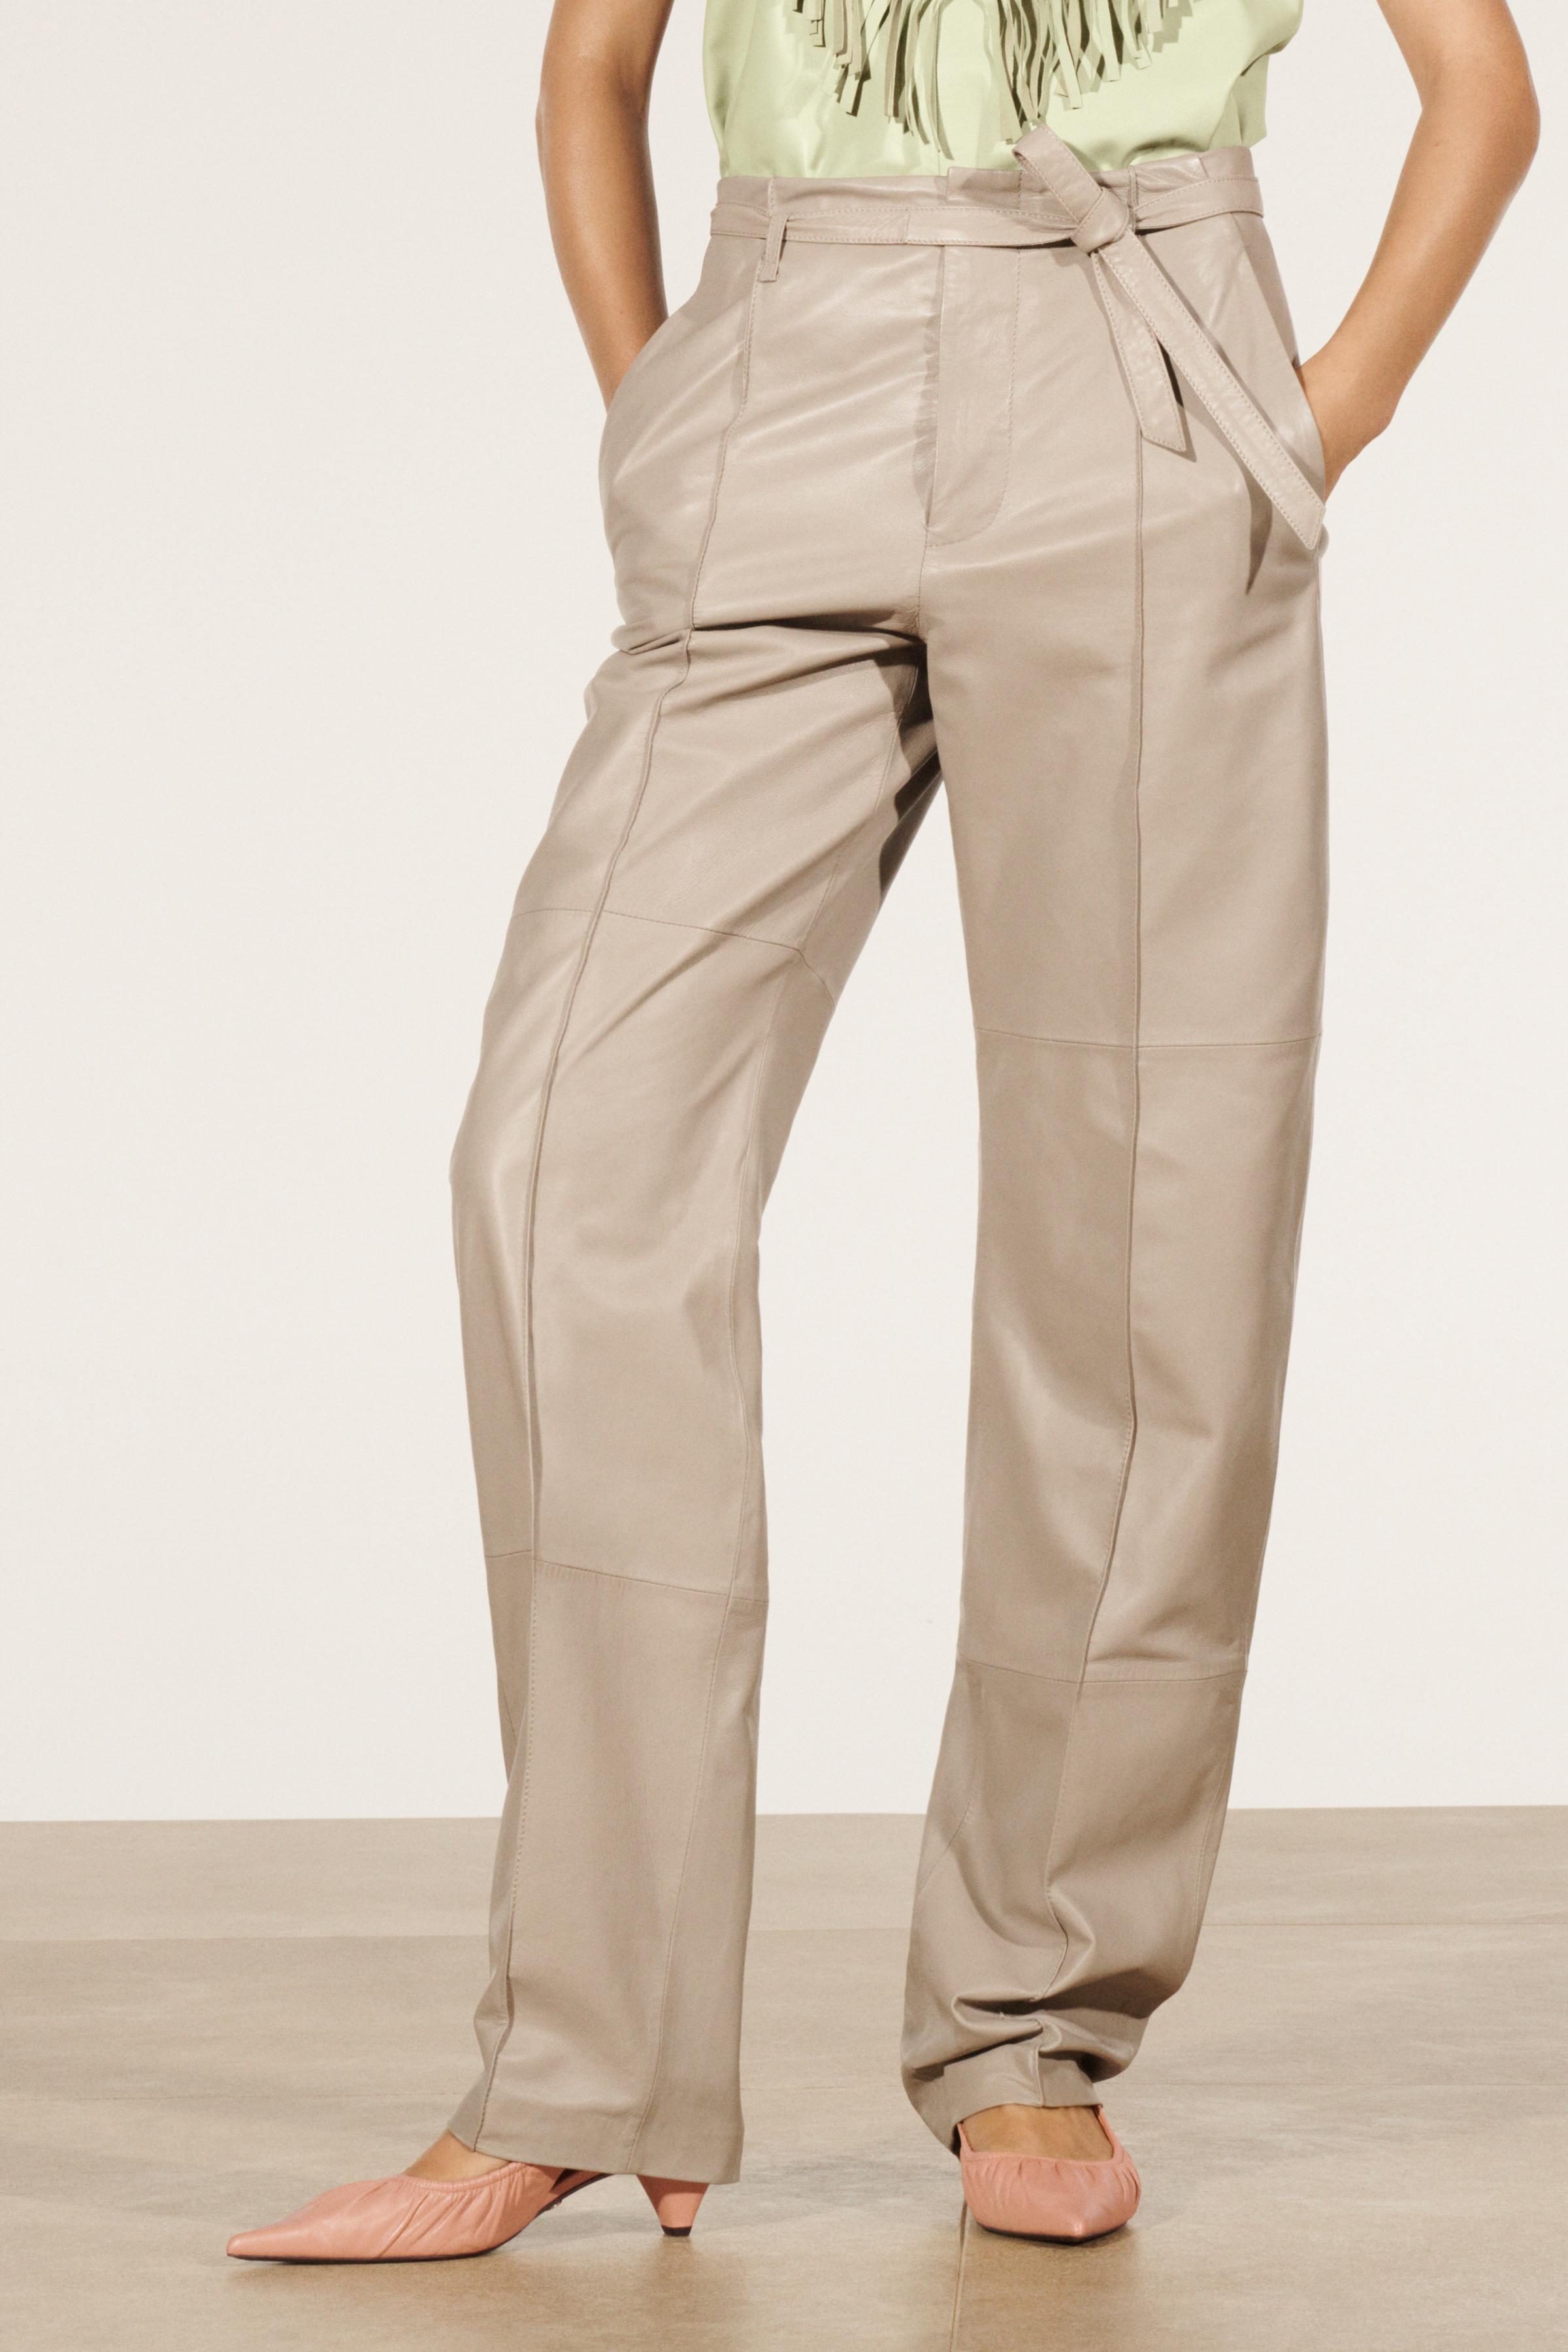 Buy Zara Trouser Pants Women High Waist online